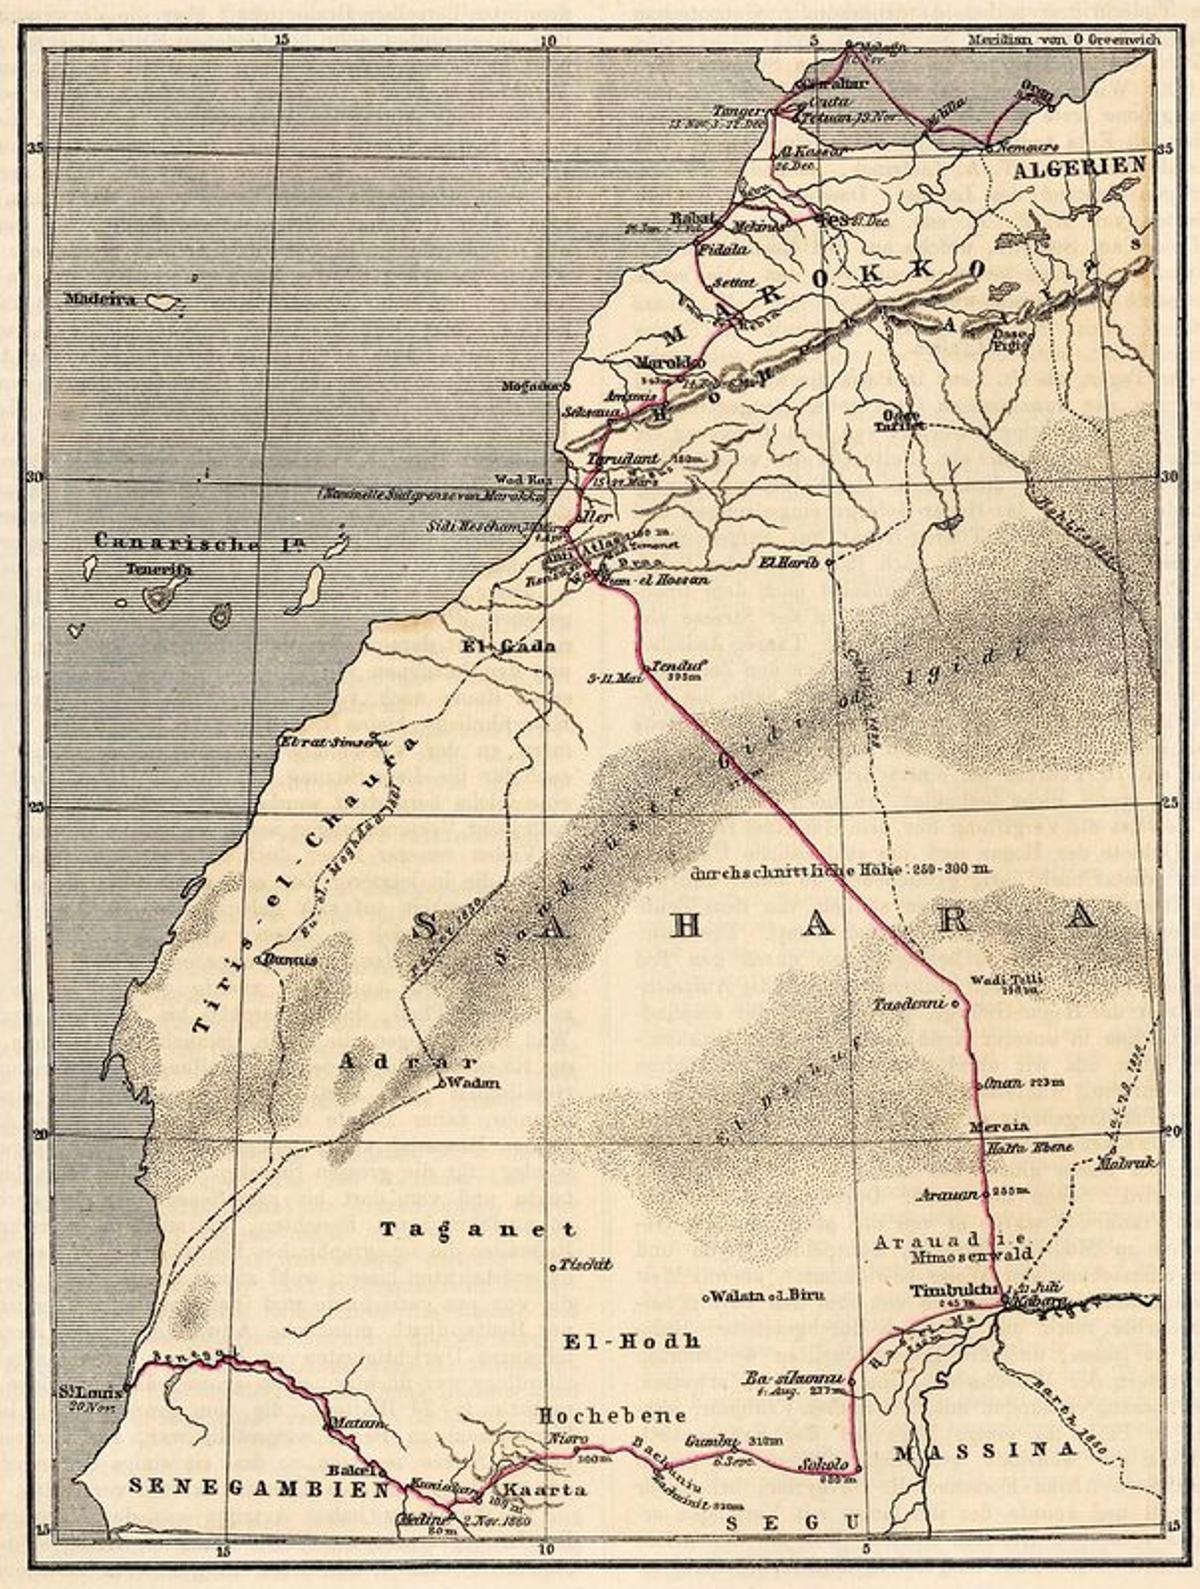 Mapa de la expedición científica de Tánger a Tombuctú de Cristóbal Benítez y Oskar Lenz que regresó a Europa por mar desde Senegal.